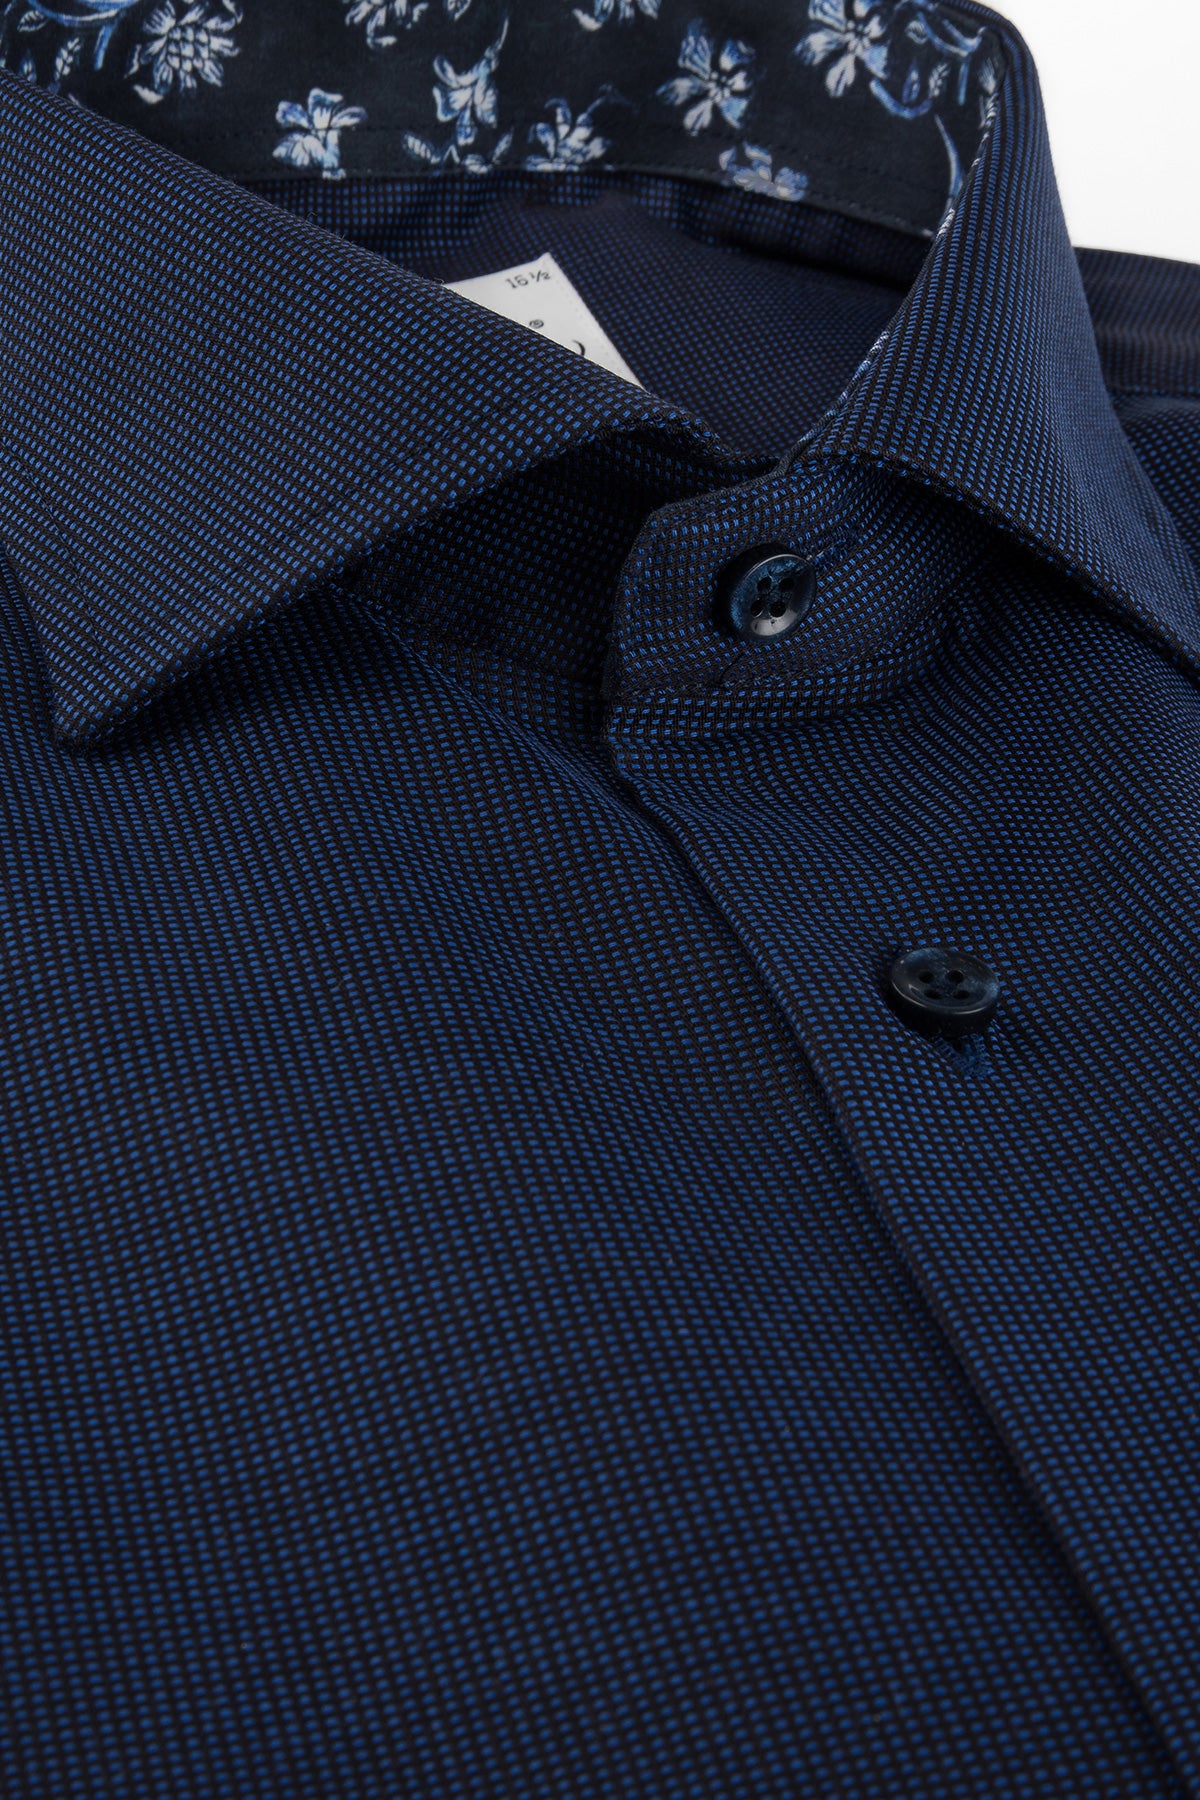 Navy blue short sleeve regular fit shirt with contrast details